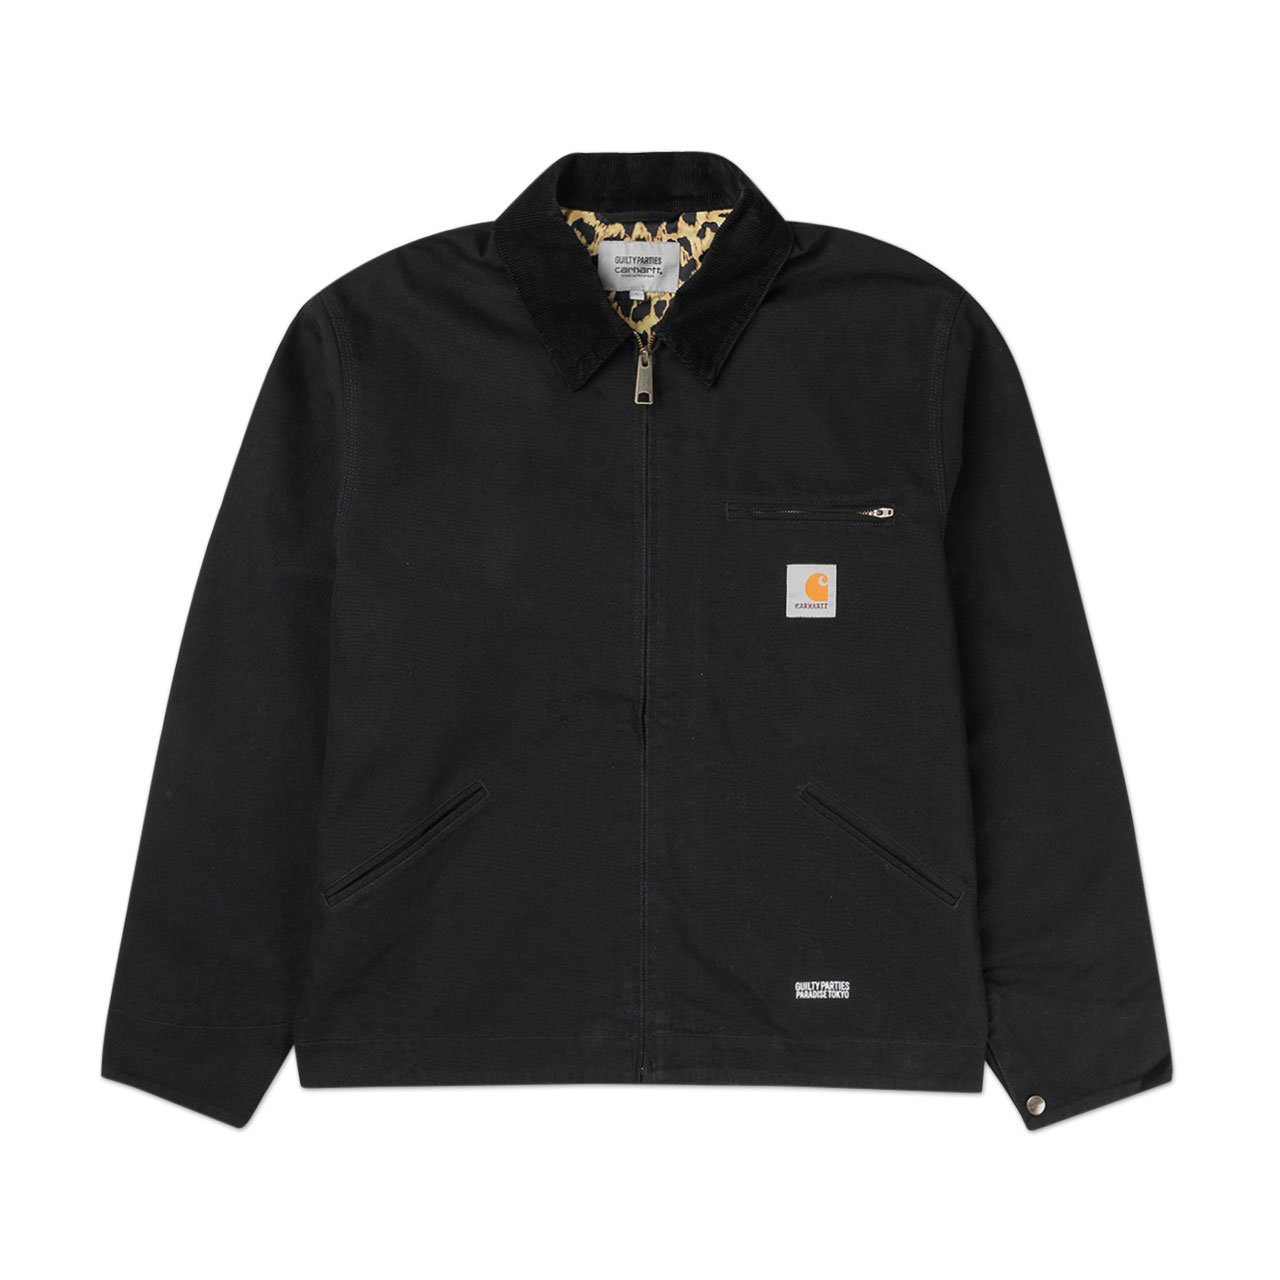 carhartt wip x wacko maria og detroit jacket (black / leopard print) - i028223.0d6.02.03 - a.plus - Image - 1